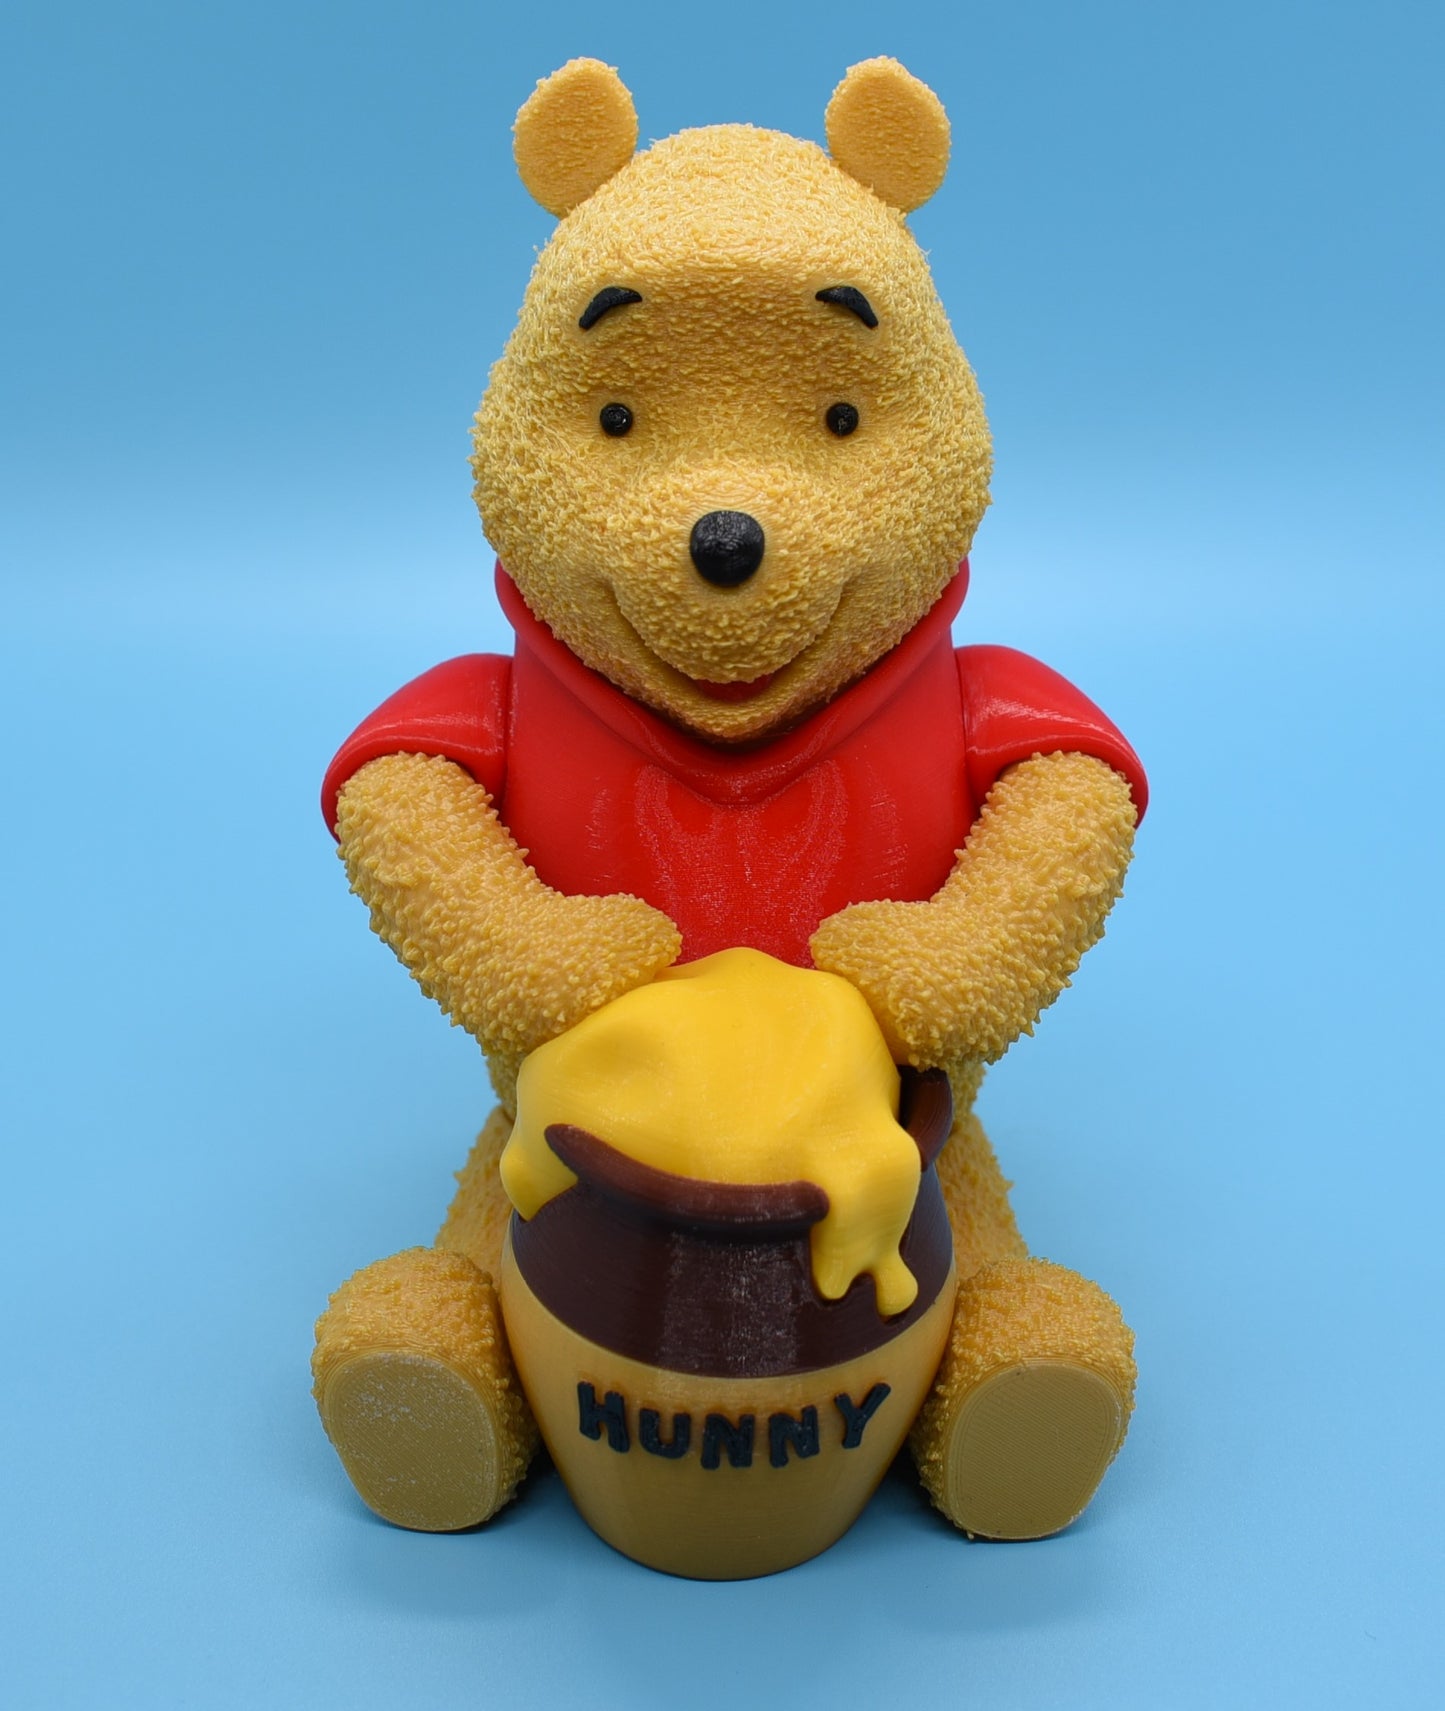 Winnie the Pooh Figurine (3d printed PLA+)